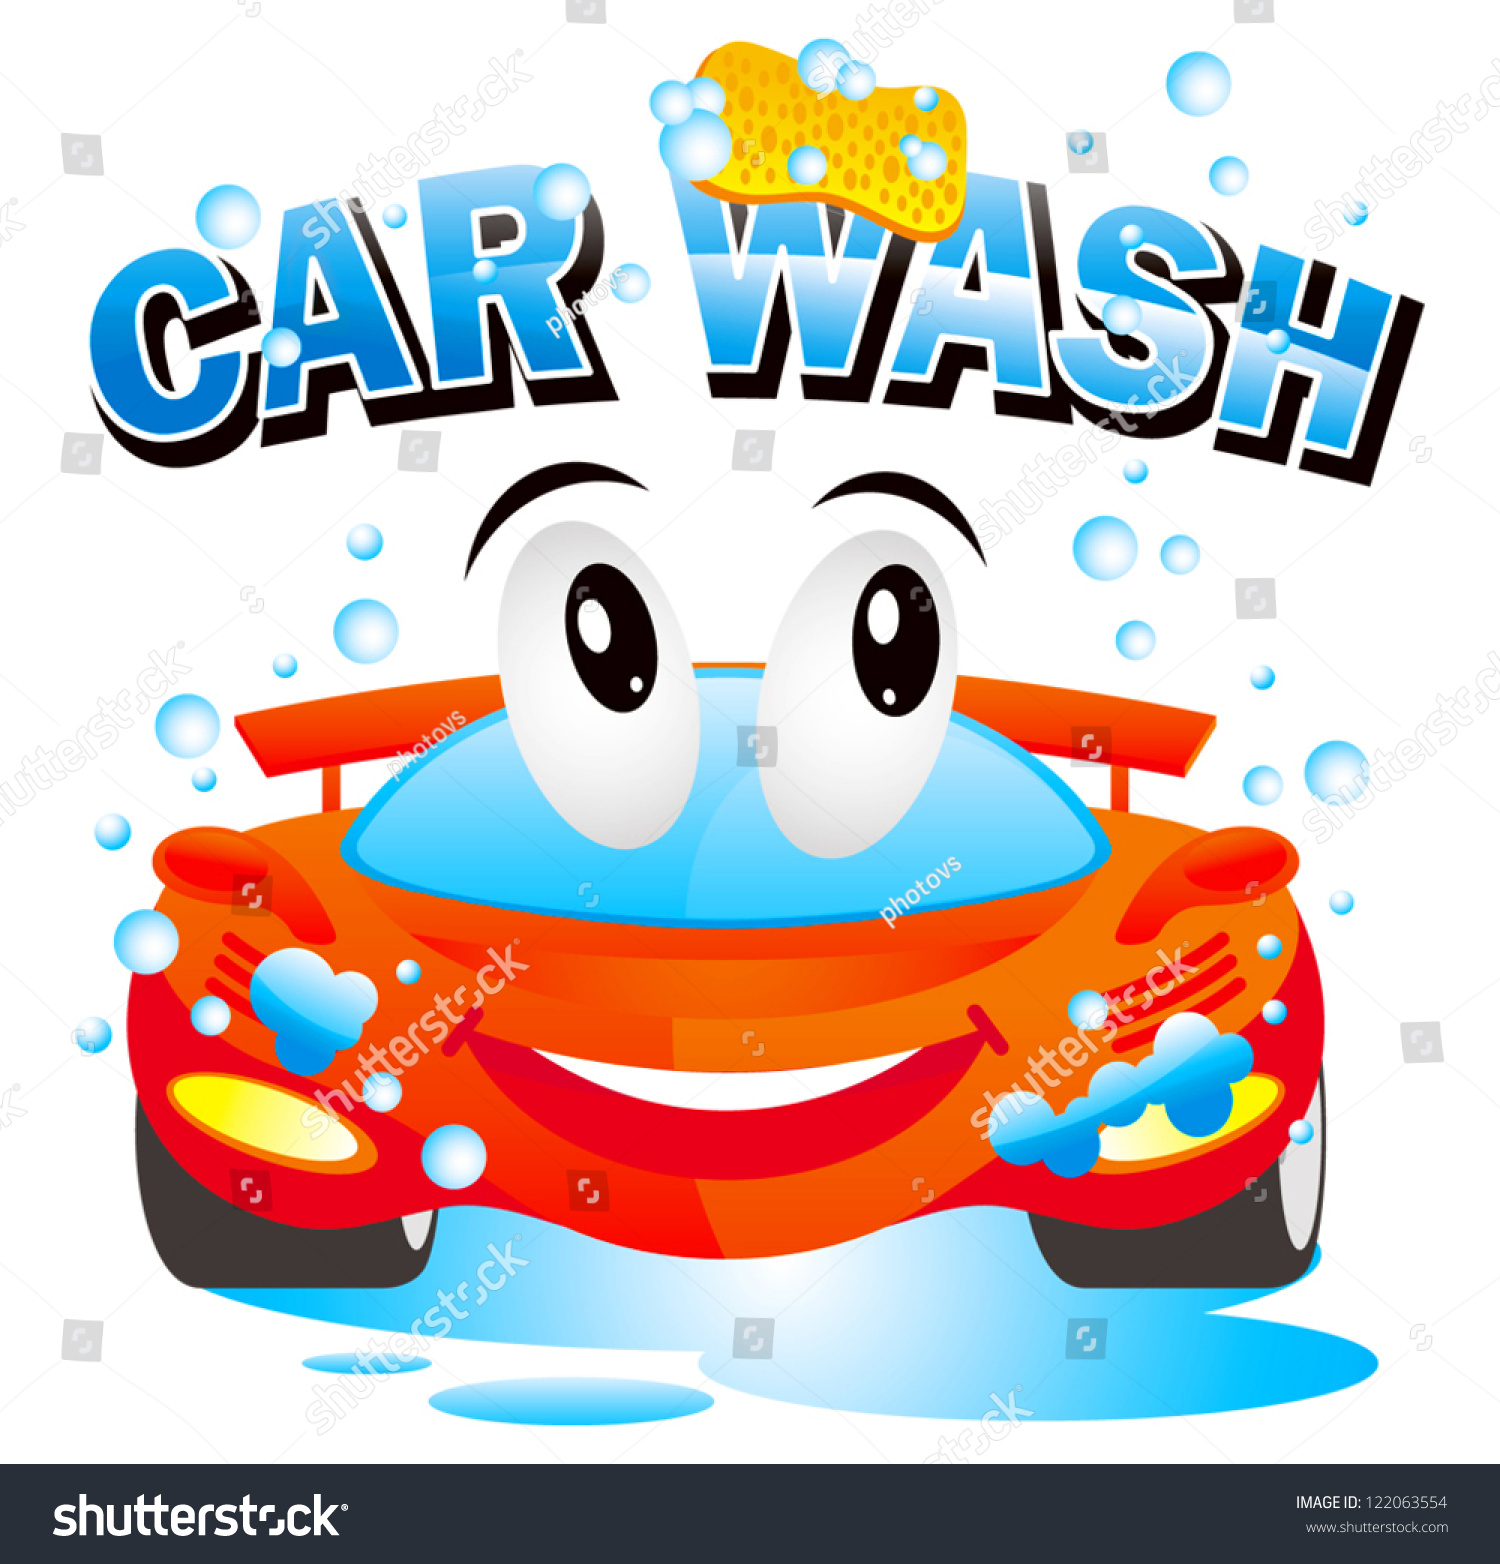 free vector car wash clipart - photo #22